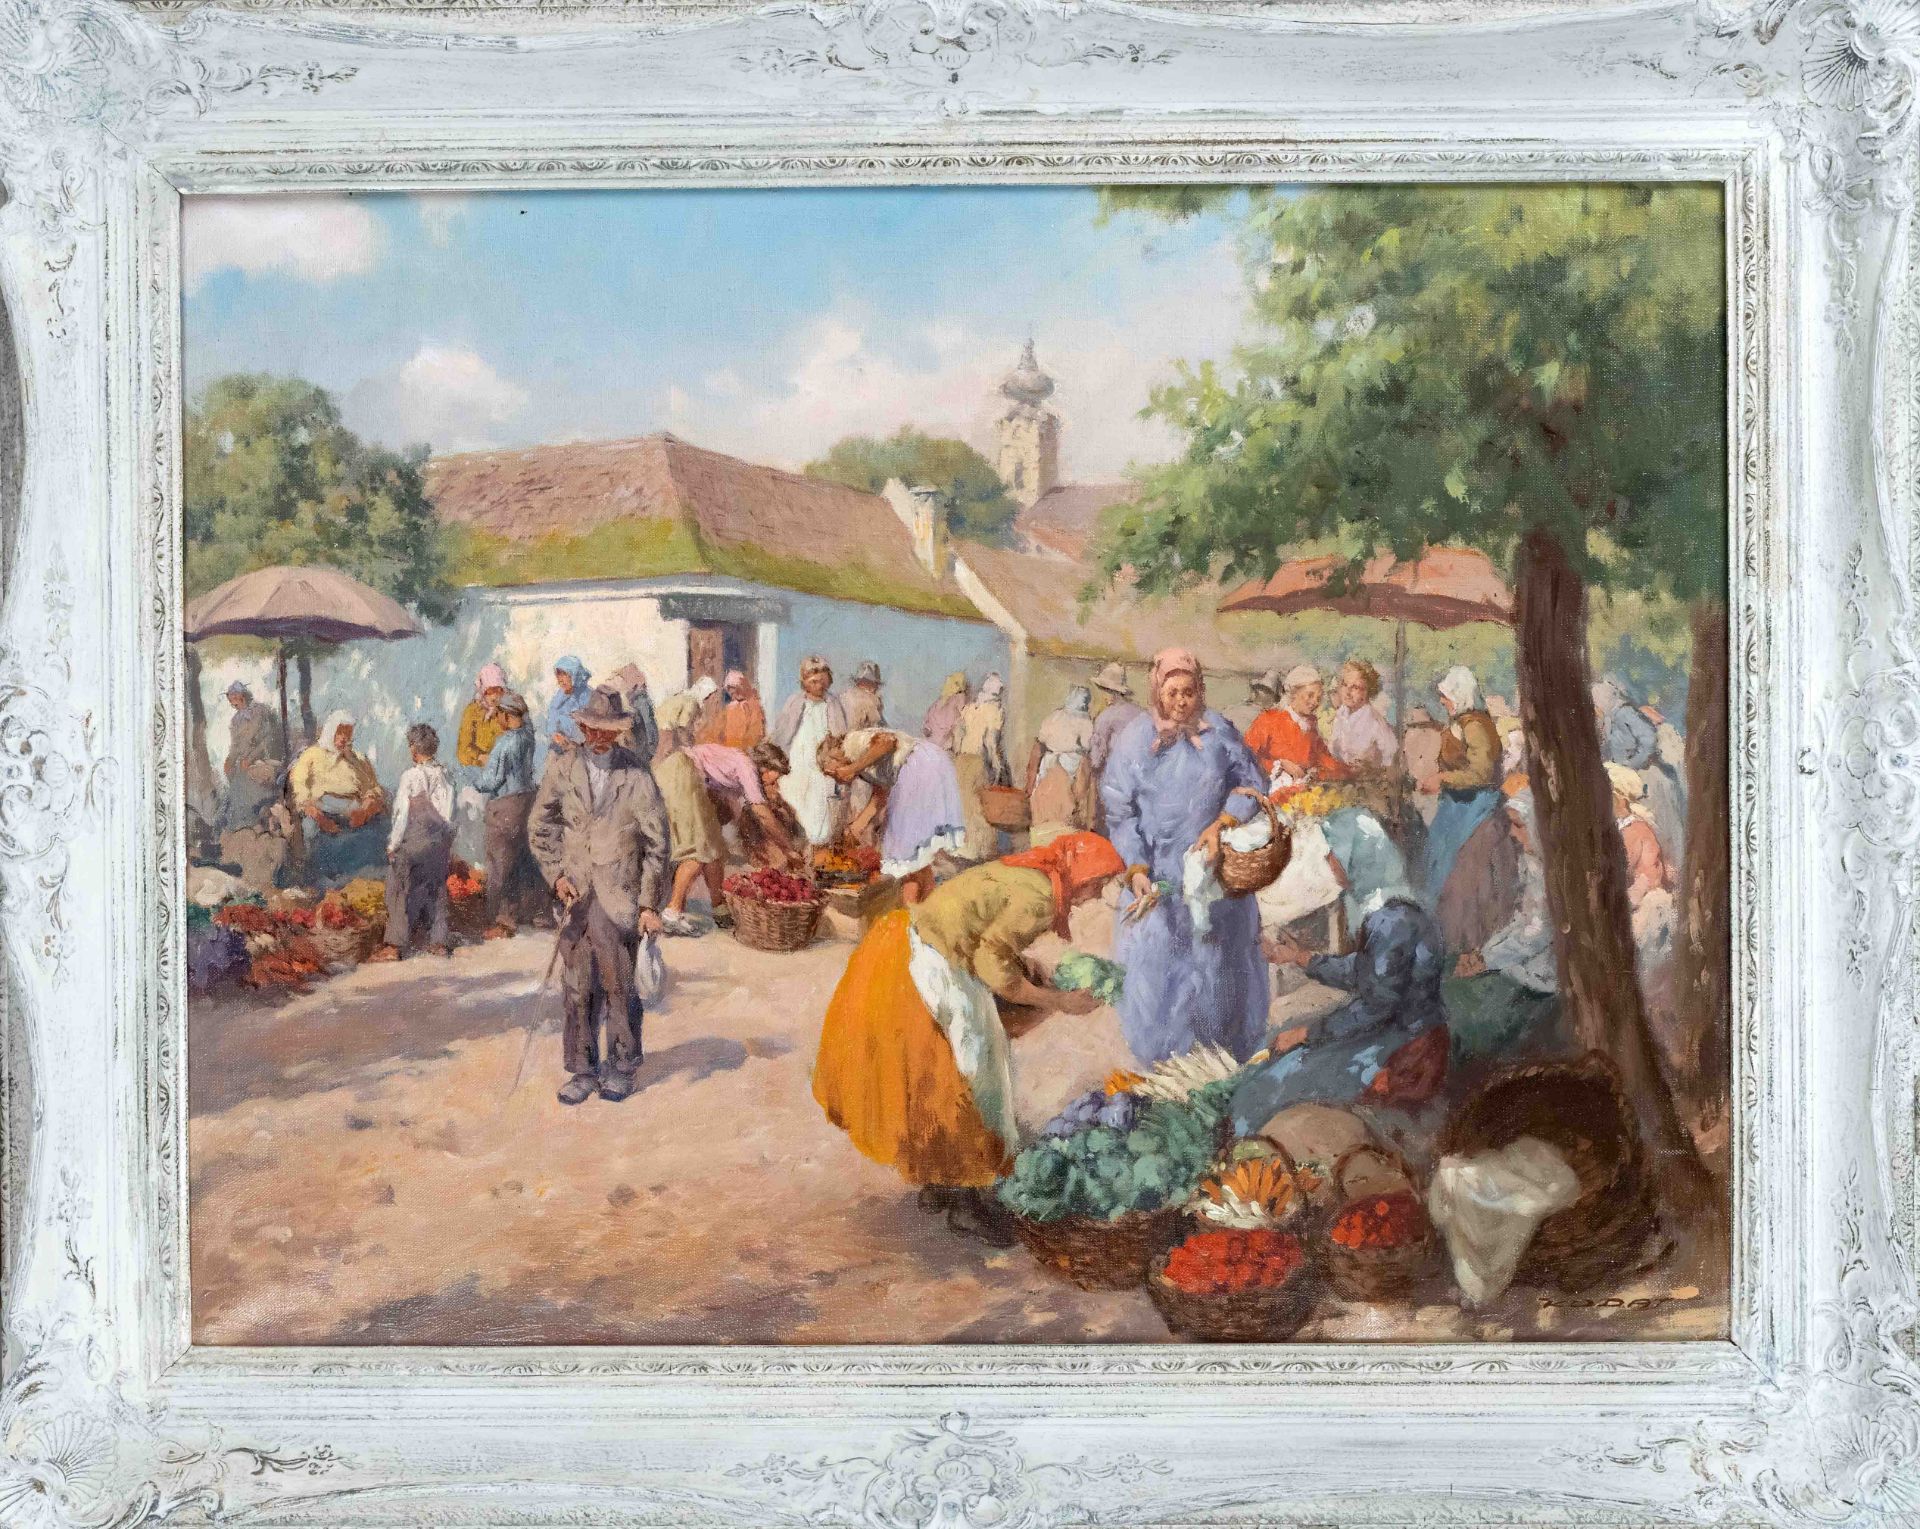 Bela Kodat (1908-1986), Hungarian artist, Vegetable Market, oil on canvas, signed lower right, 60